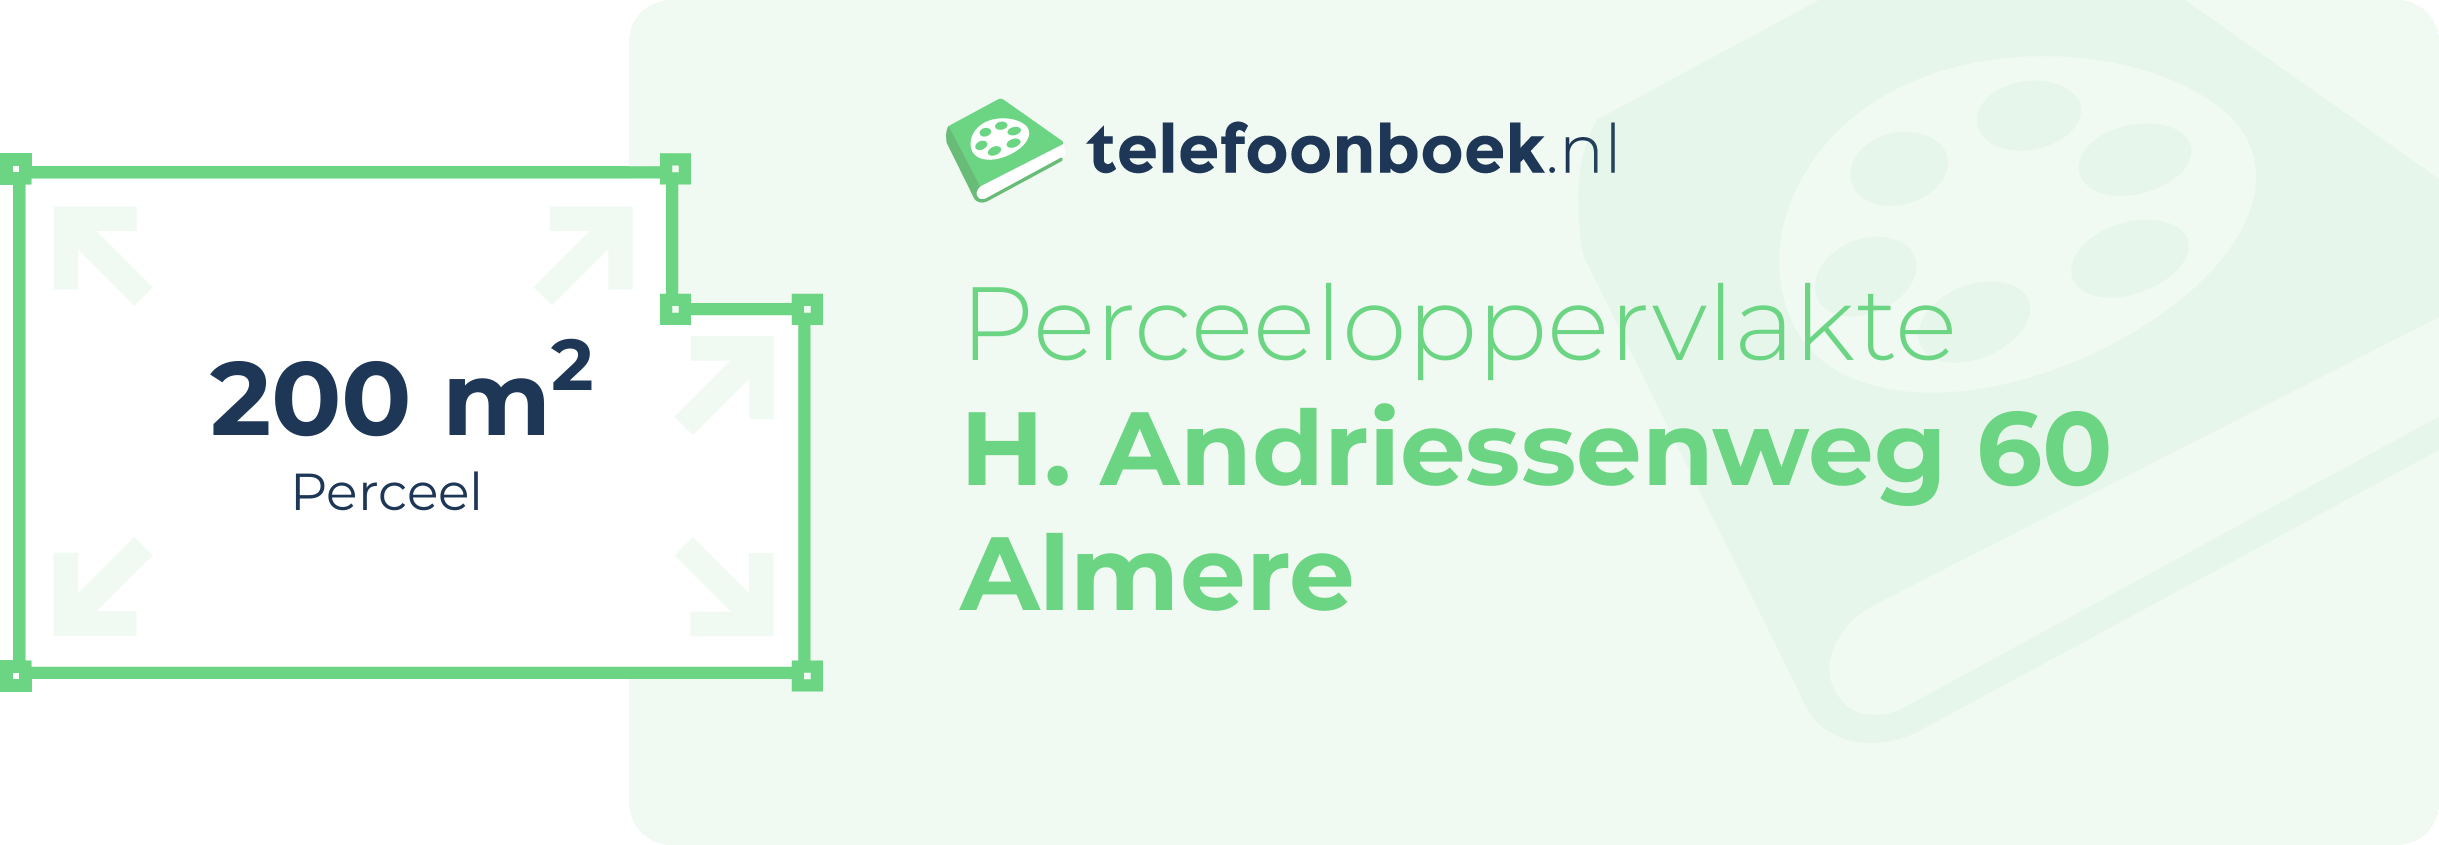 Perceeloppervlakte H. Andriessenweg 60 Almere